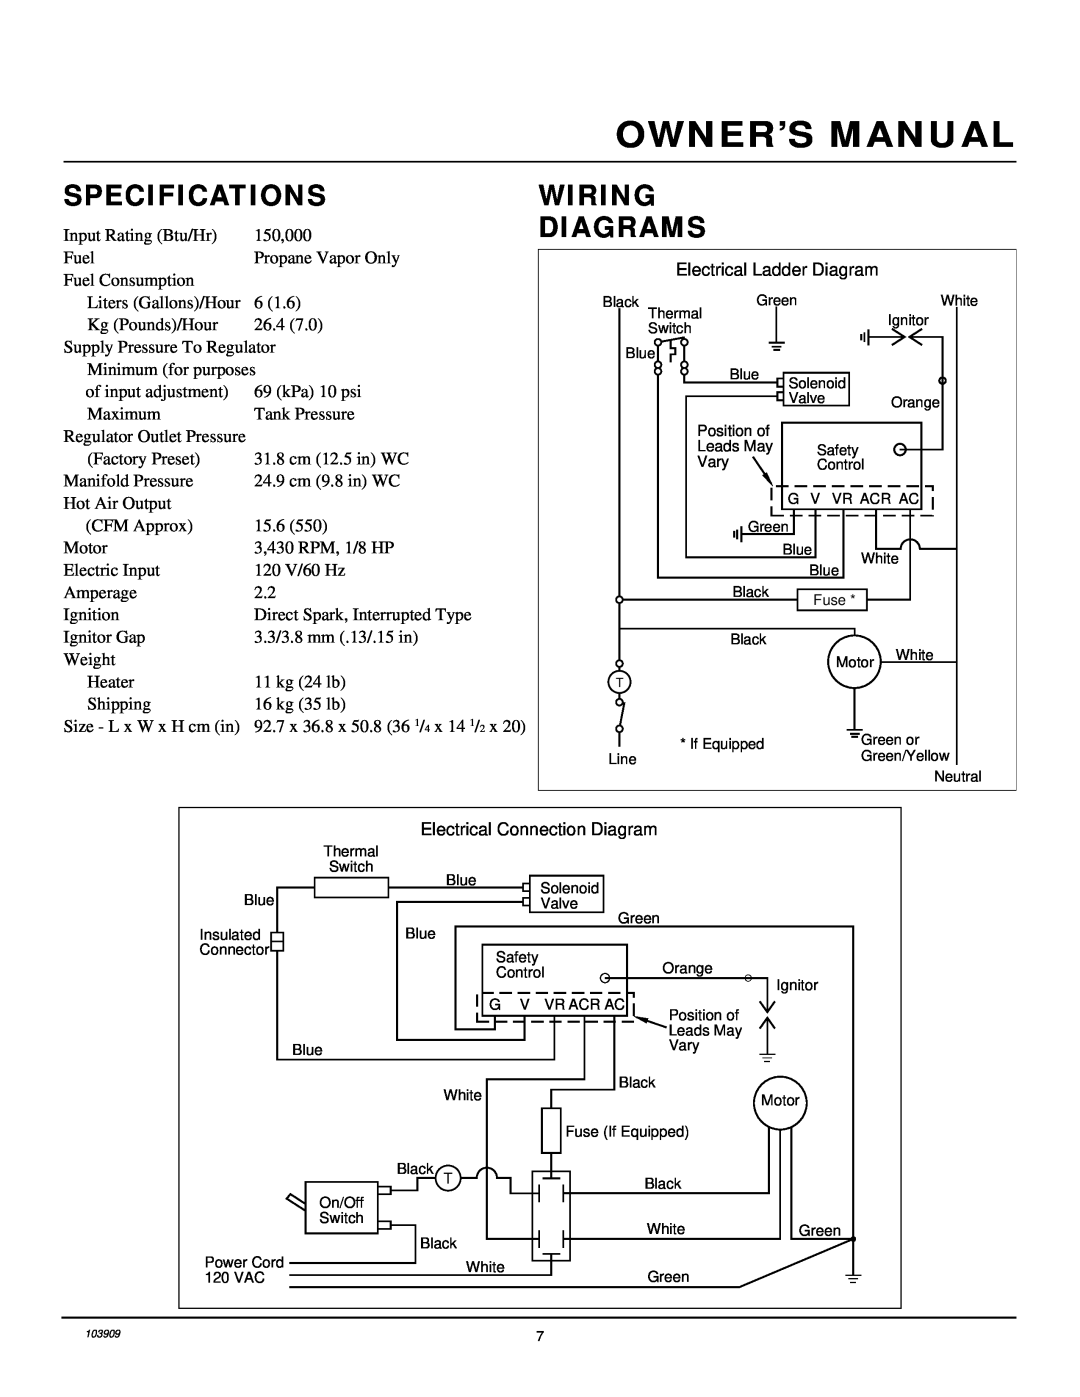 Desa RCLP155B owner manual Specifications, Wiring, Diagrams, Owner’S Manual 